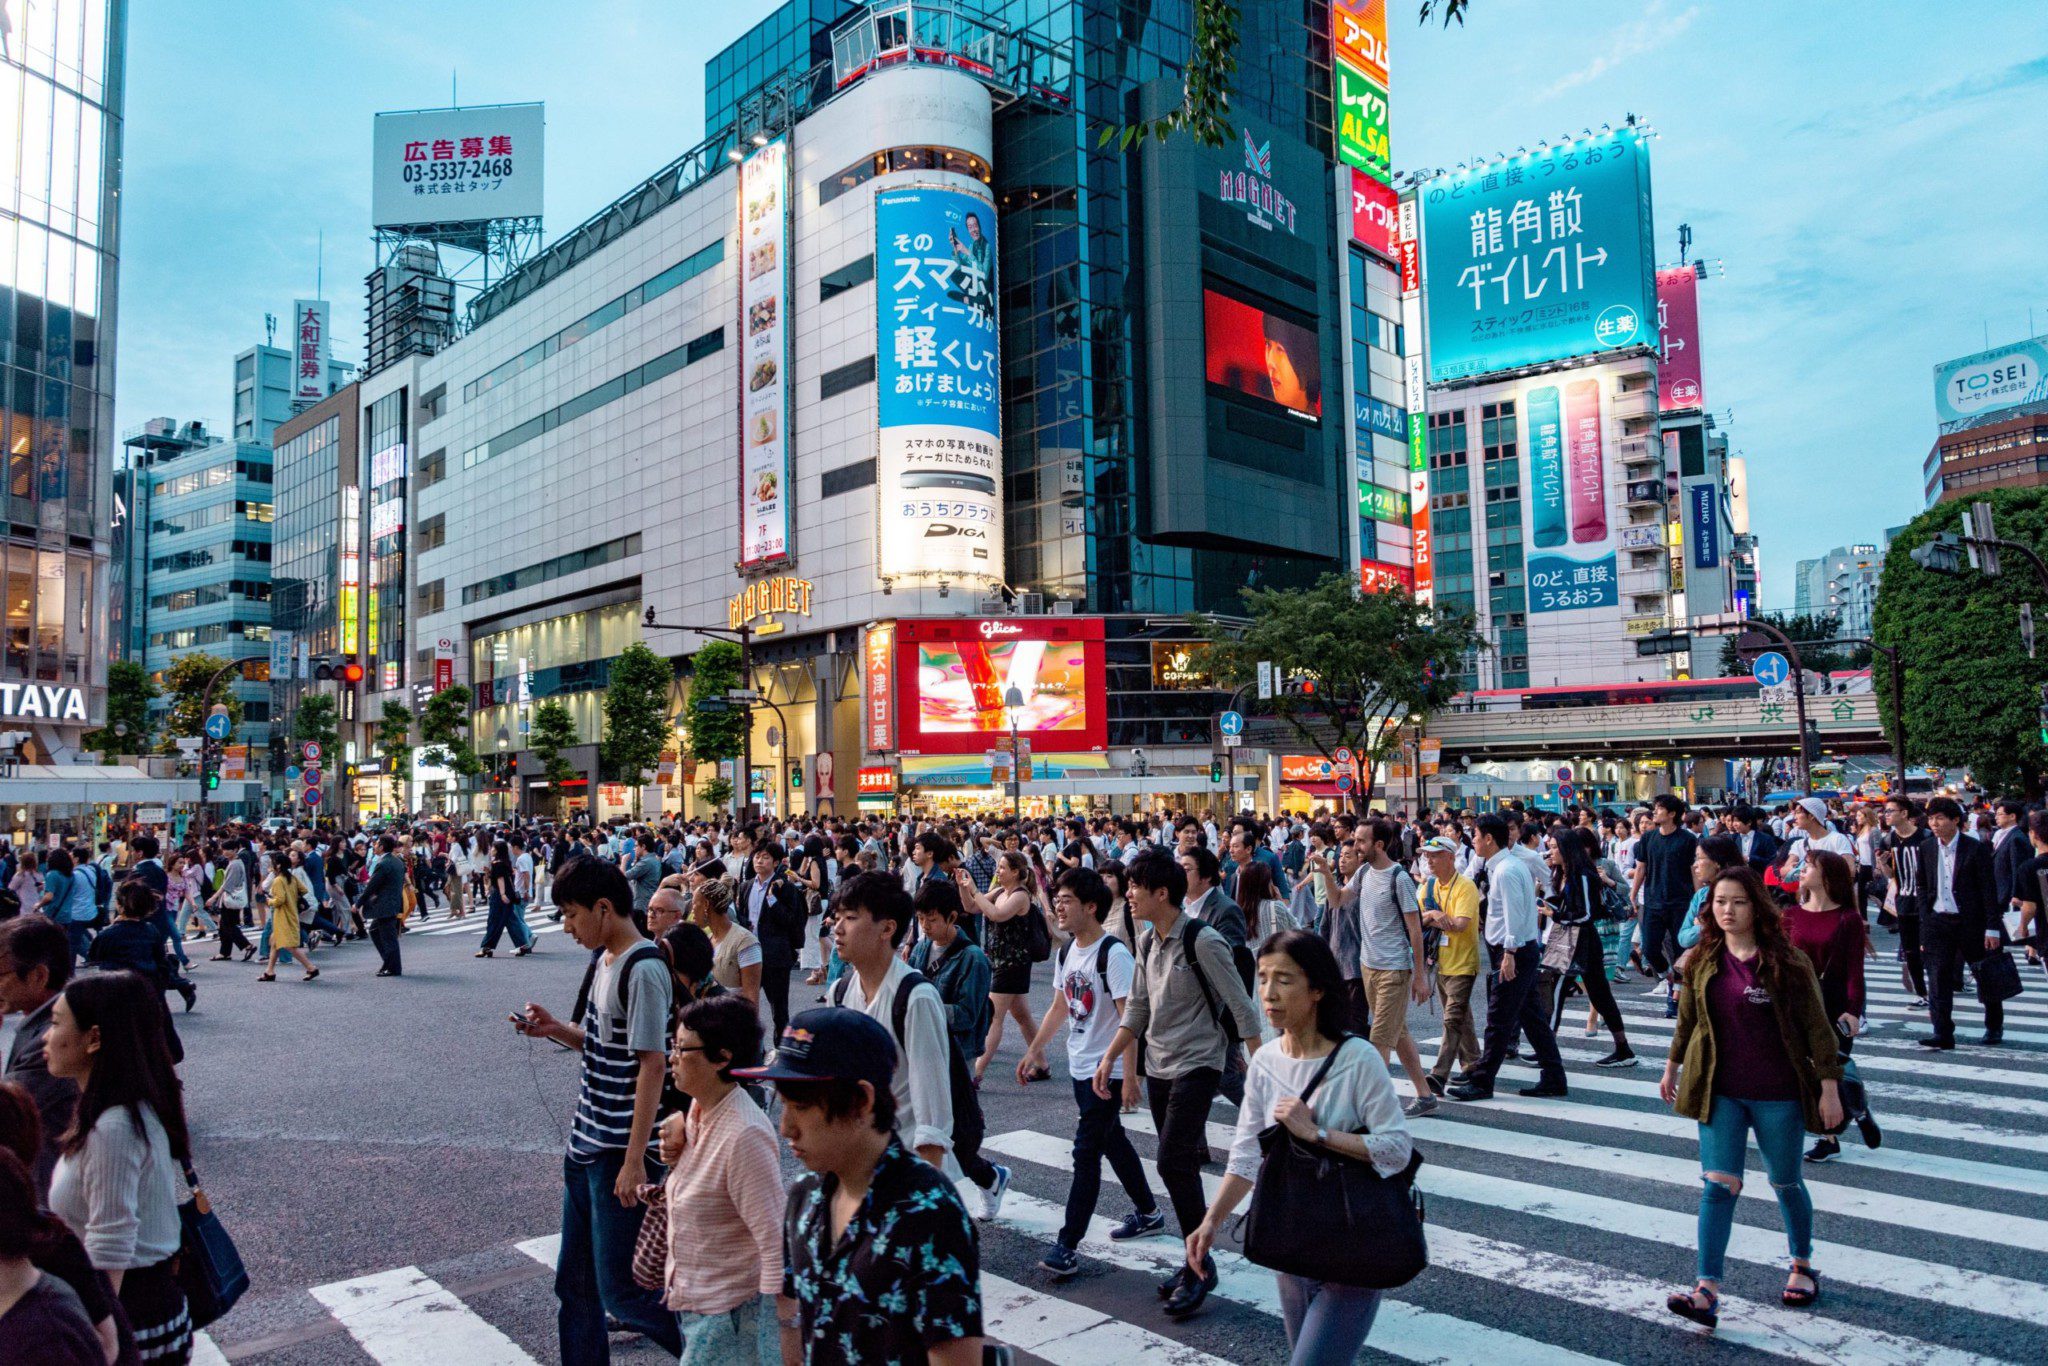 Tokyo “chiusa” per virus: l’emergenza Covid-19 in Giappone